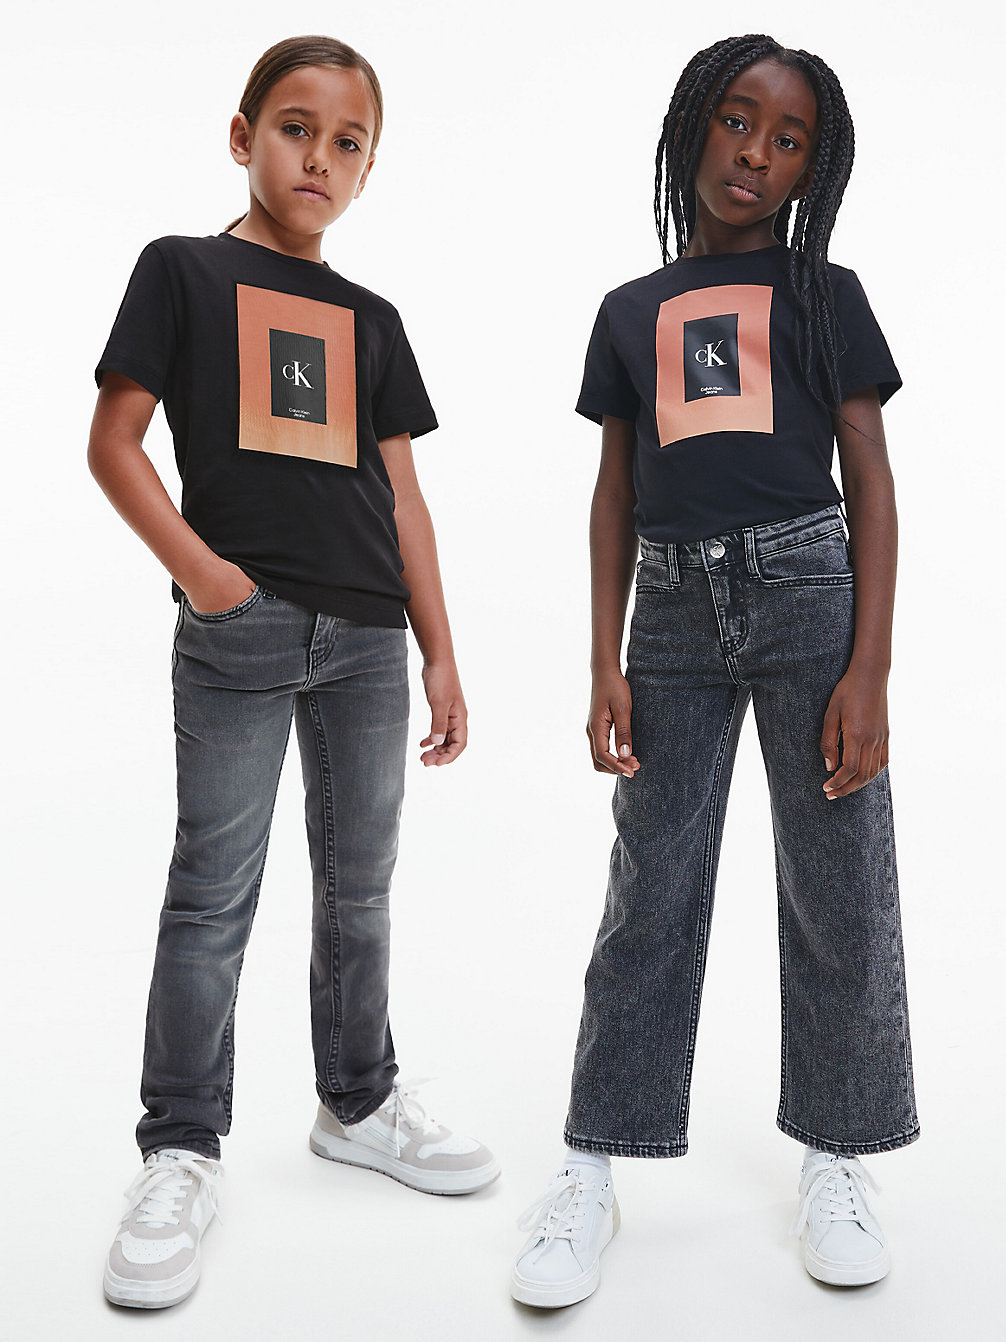 CK BLACK > Unisex T-Shirt Van Biologisch Katoen > undefined kids unisex - Calvin Klein